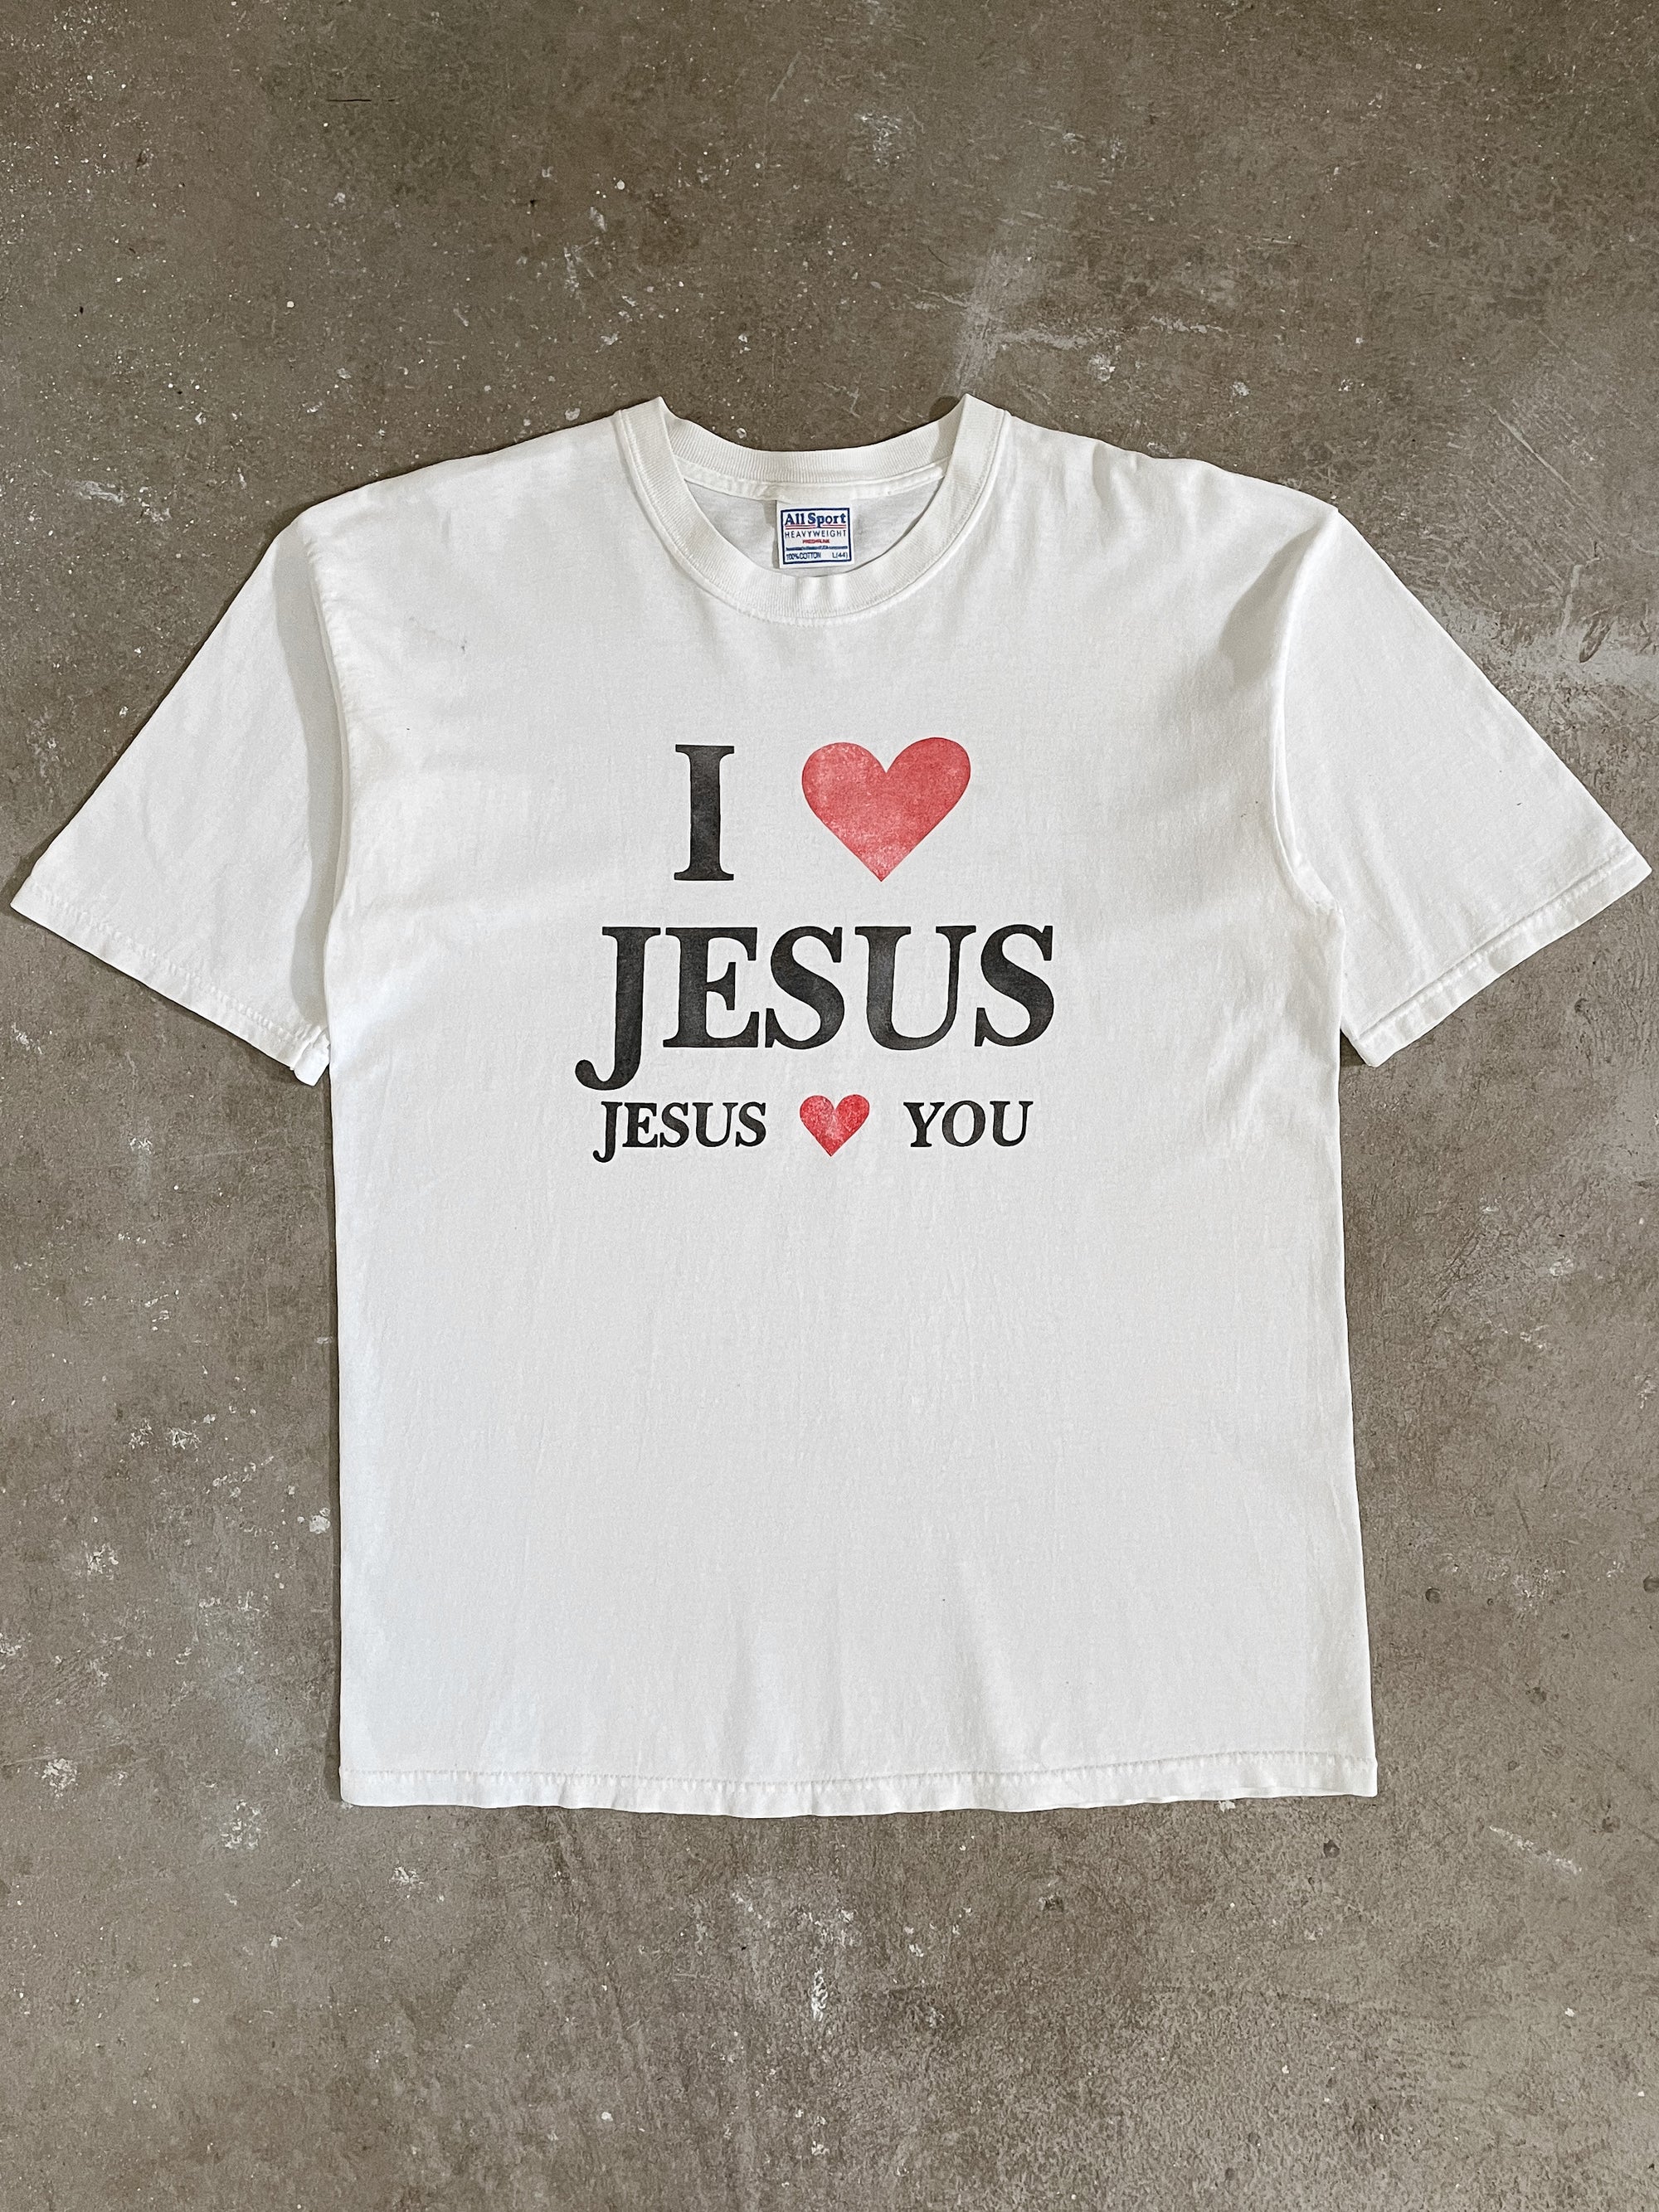 1990s “I Love Jesus” Tee (M/L)